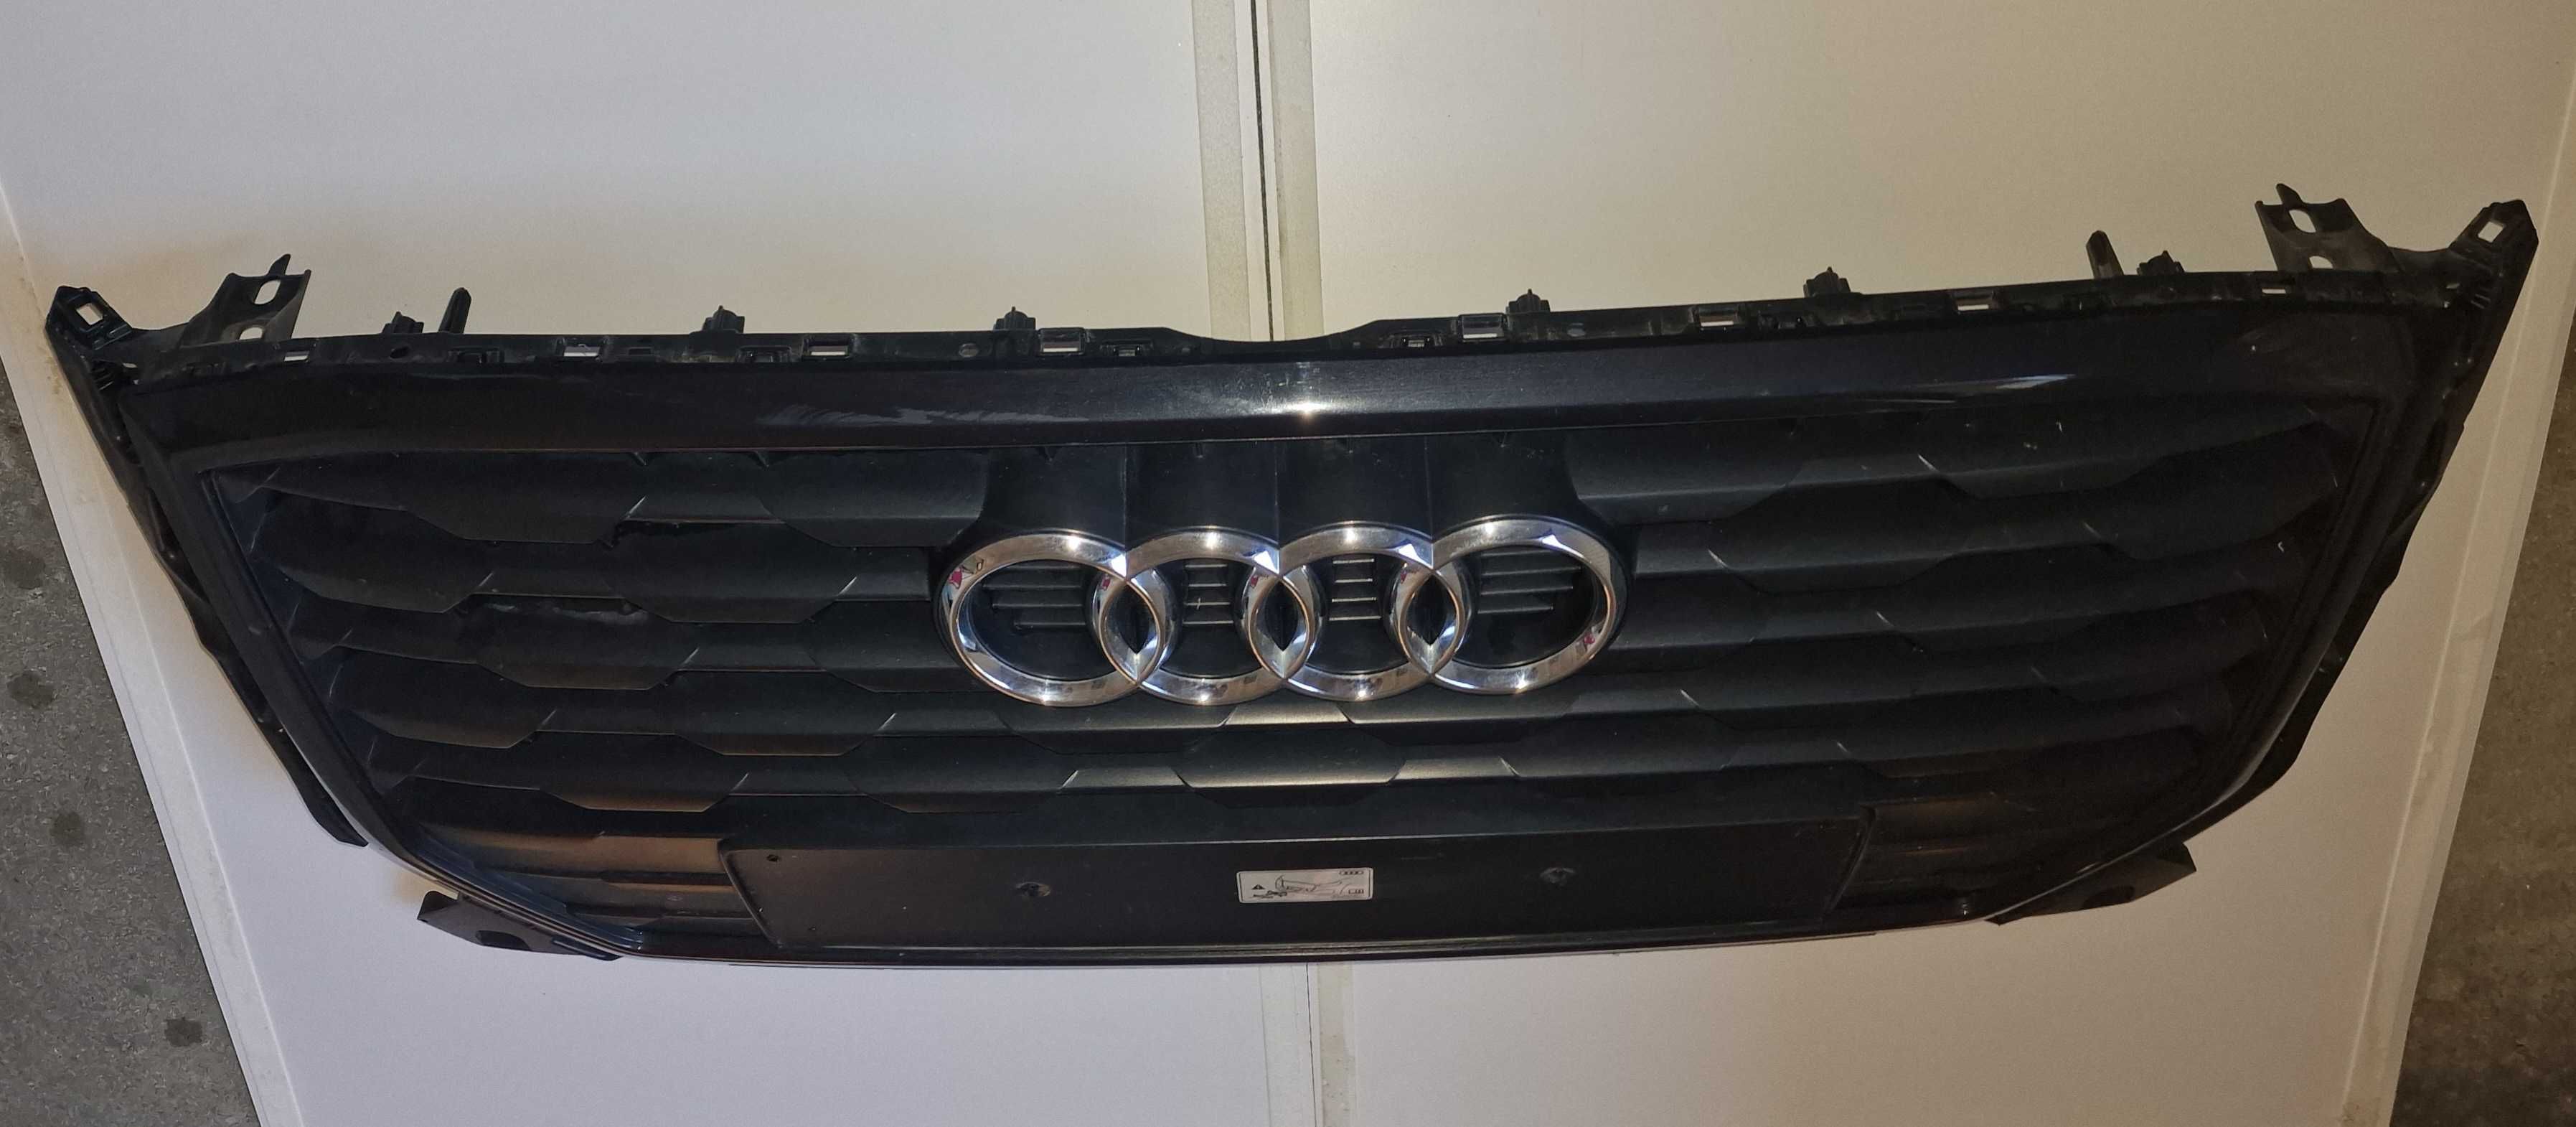 Grila radiator Audi Q2 Black Edition 2017 》 2021
81a853651